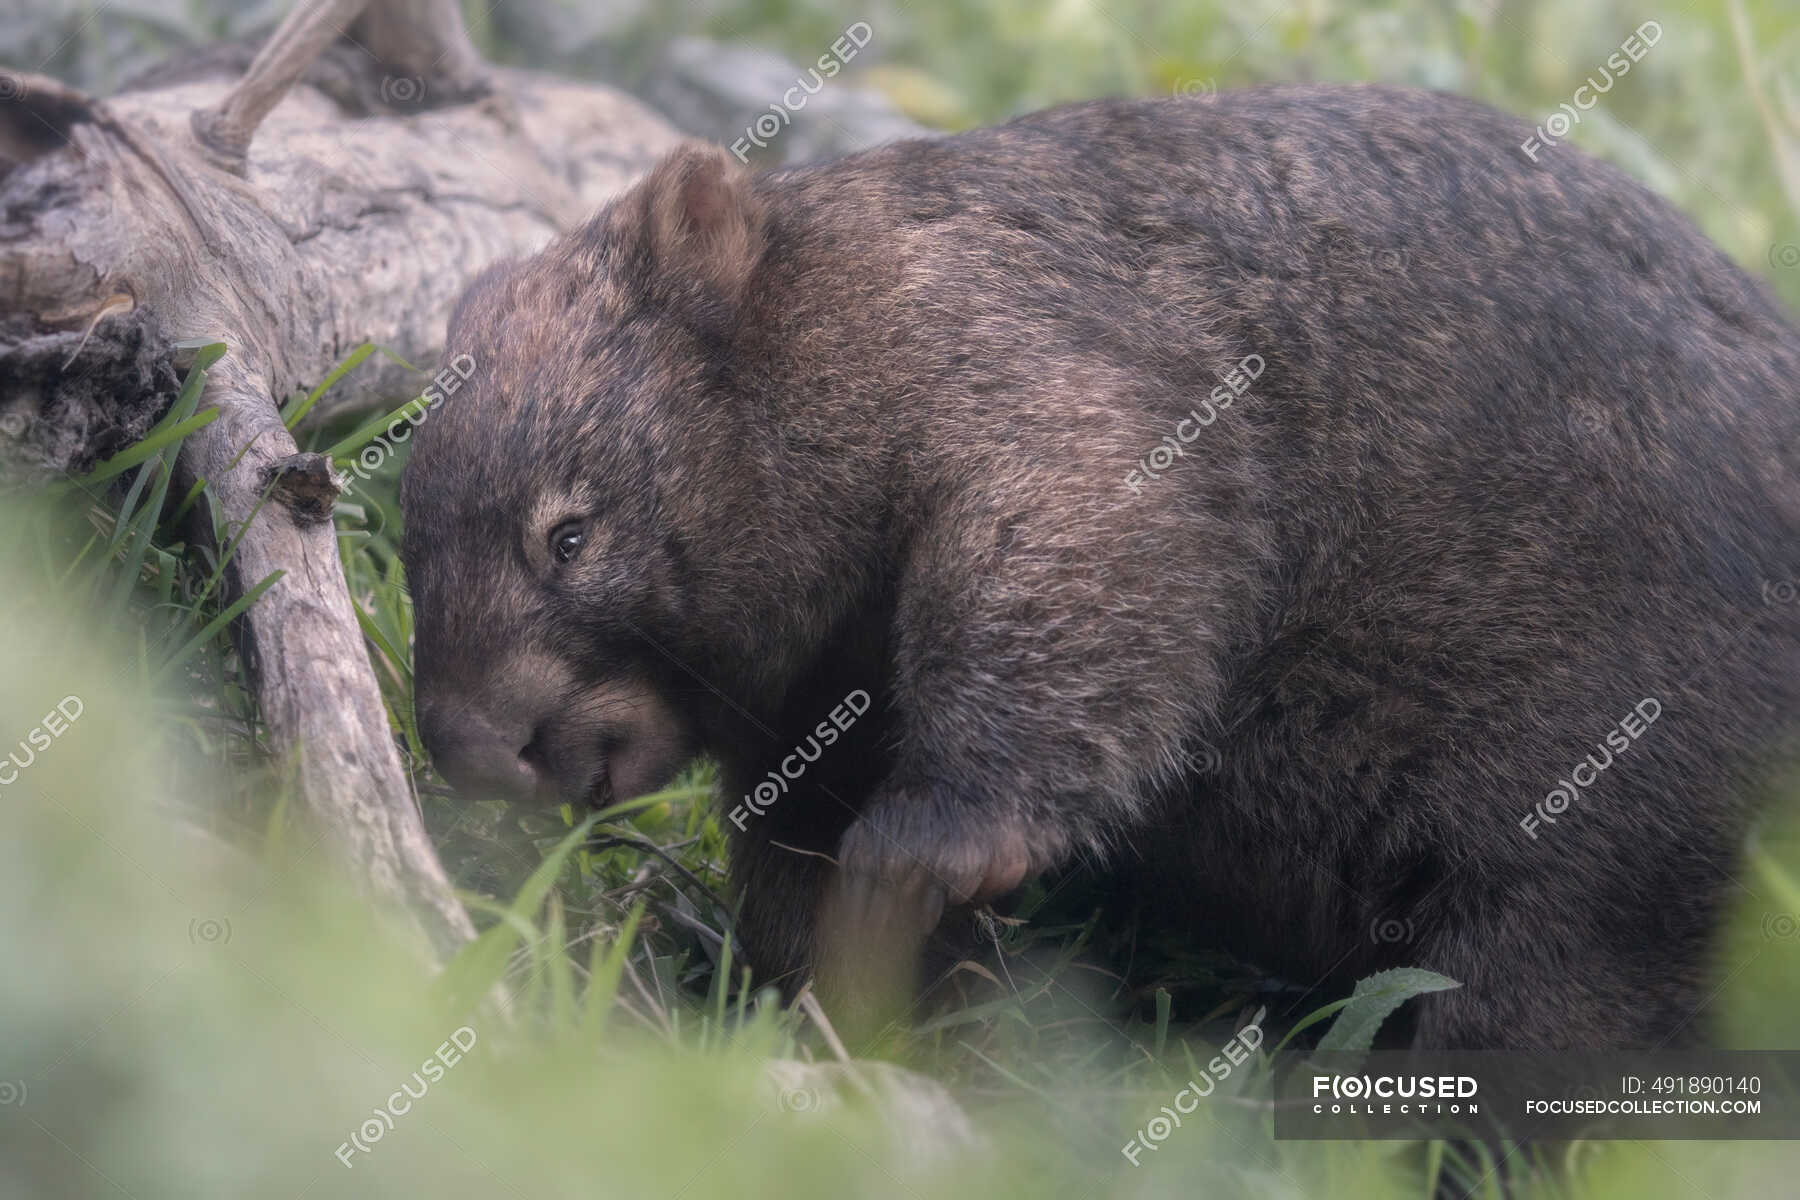 Close-up of common wombat (Vombatus ursinus) nex to a fallen tree,  Australia — standing, side view - Stock Photo | #491890140